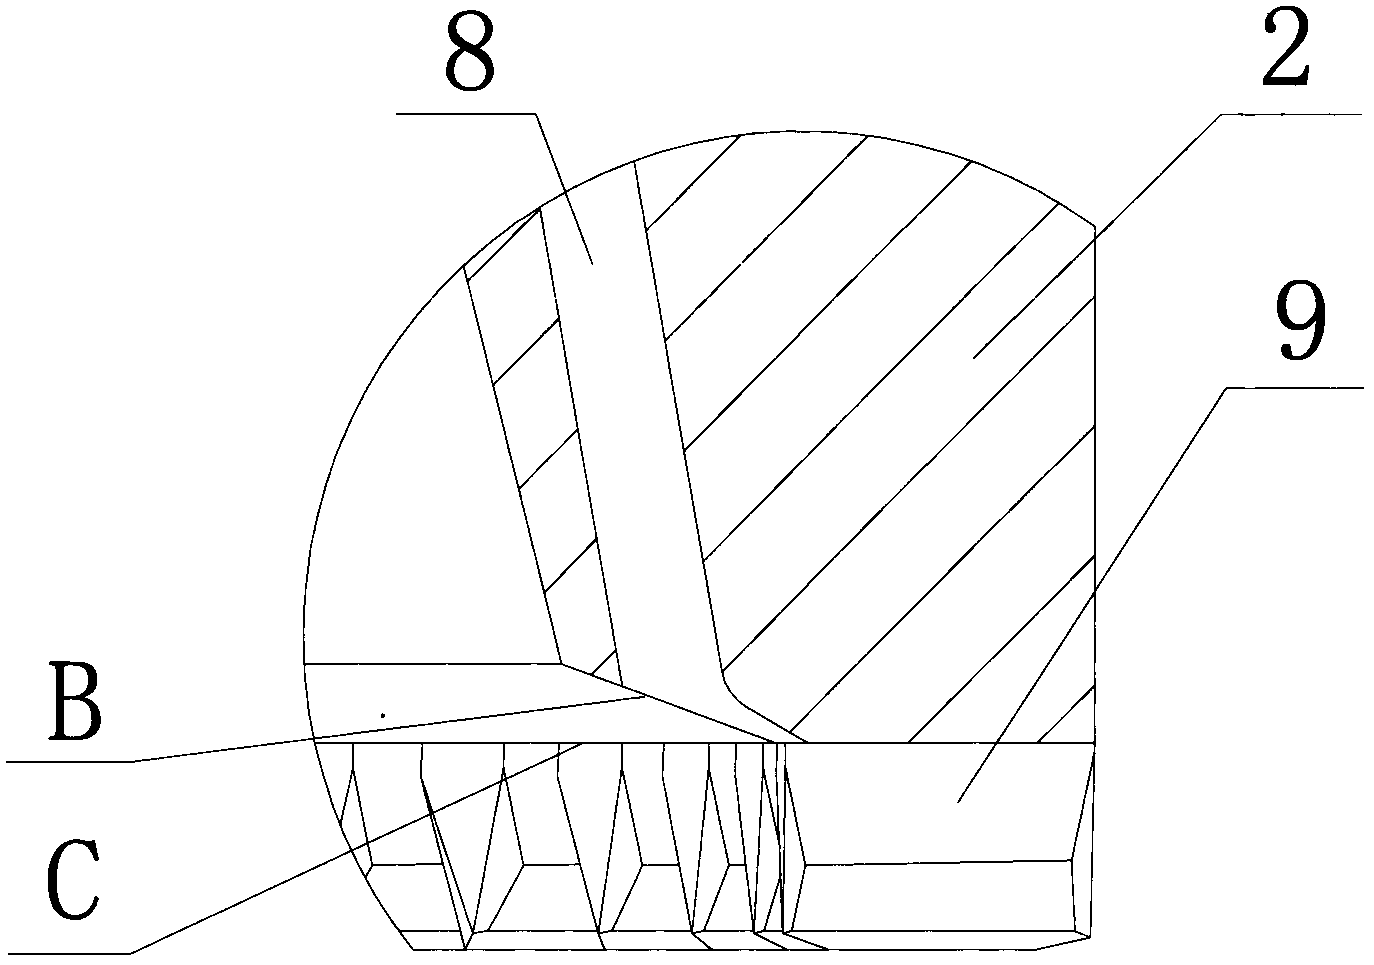 Internal cooling grinding wheel